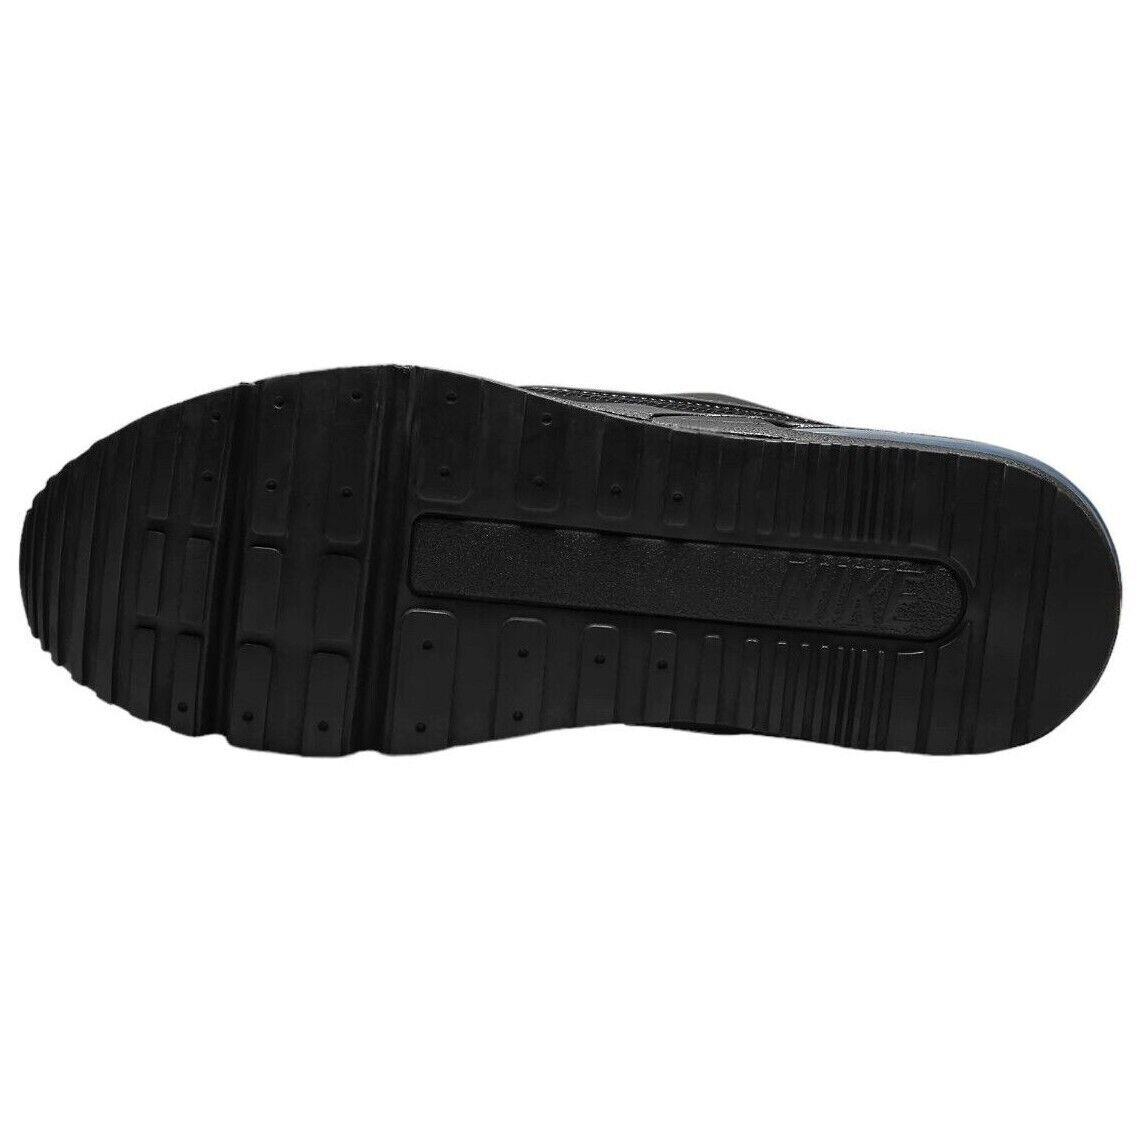 Nike Air Max Ltd 3 Men`s Casual Shoes Black 687977 020 US Szs 7-14 - Black